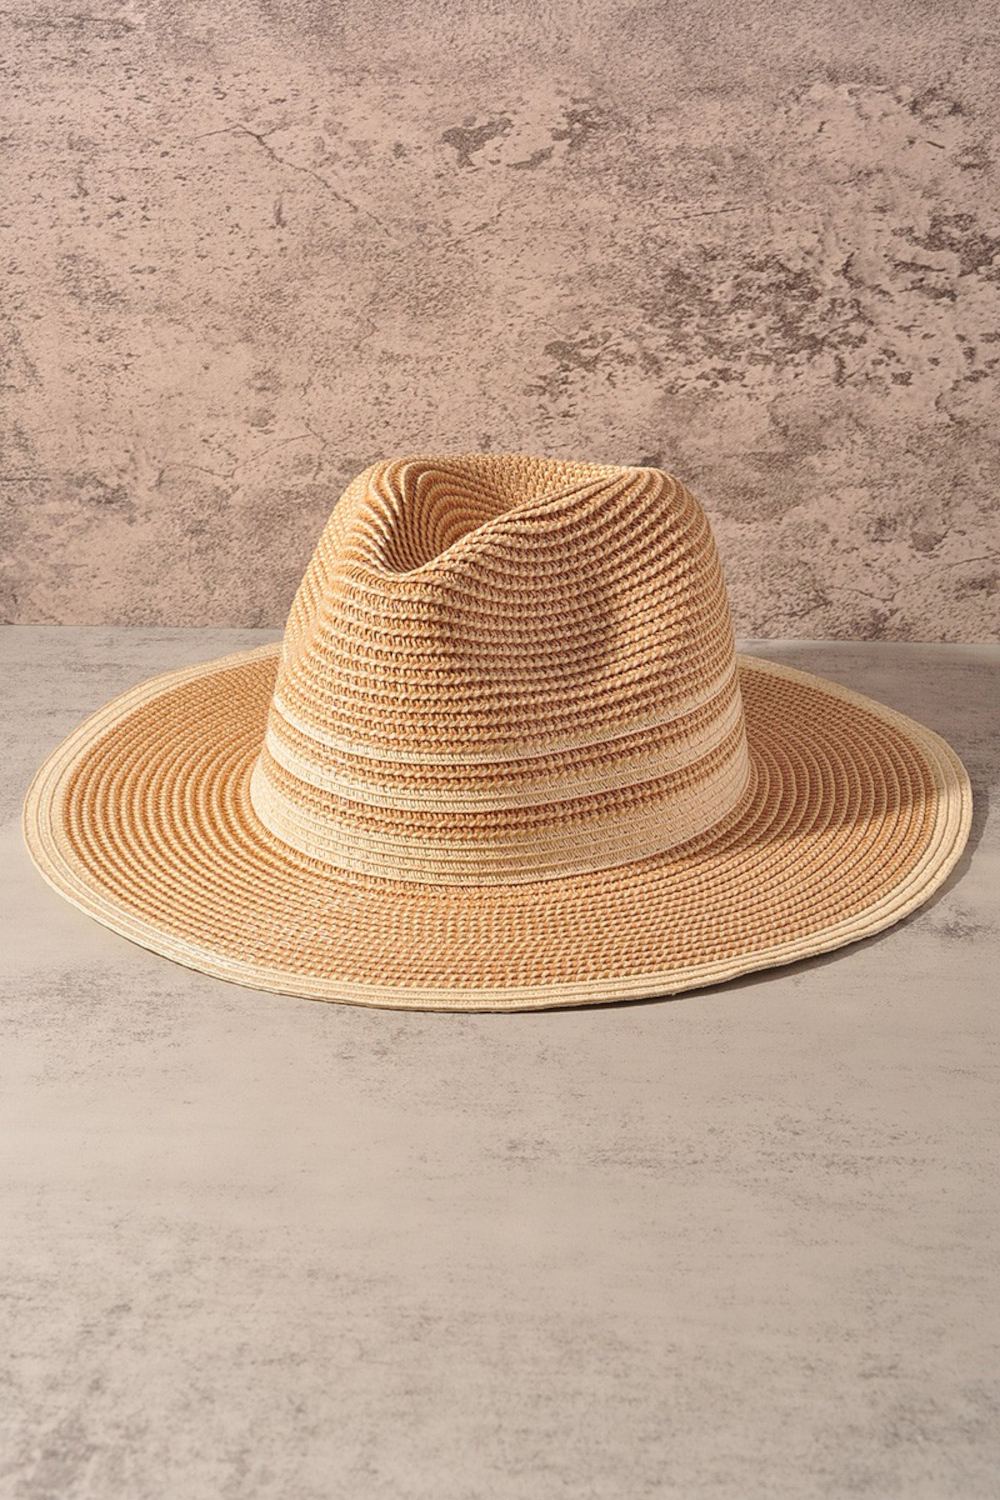 Stripe Straw Panama Hat-Natural/Beige